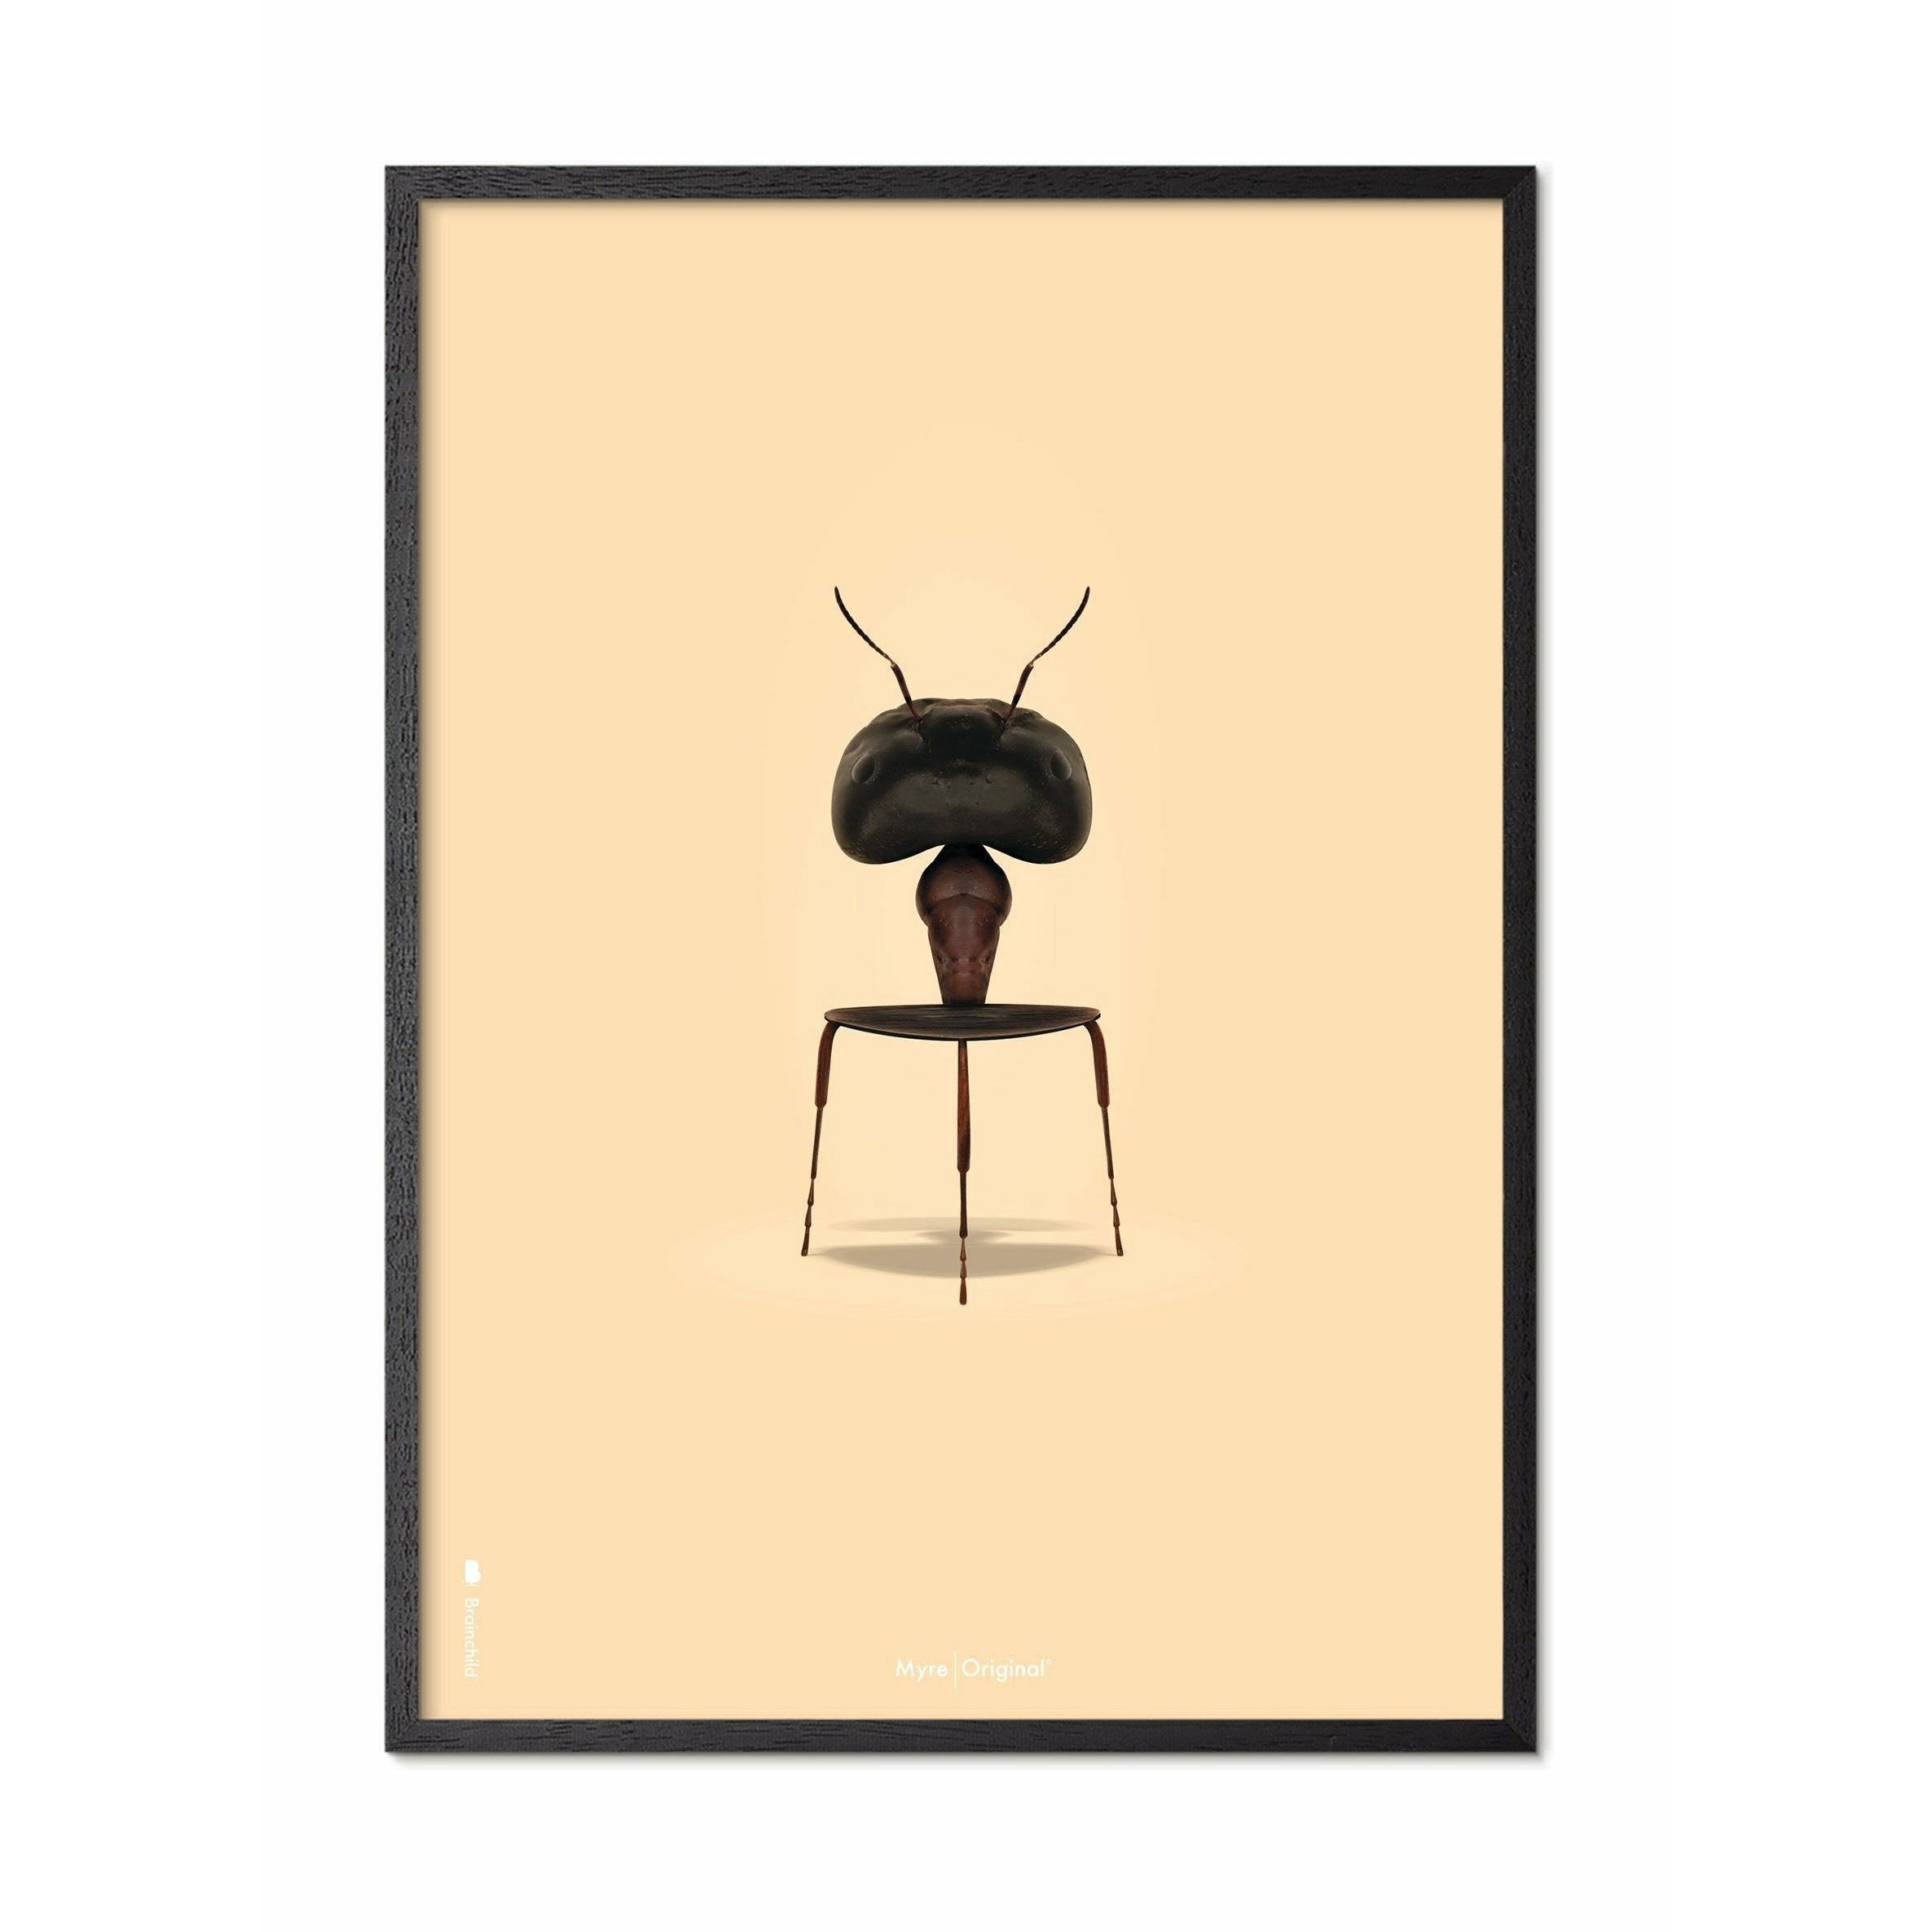 Brainchild Ant klassisk affisch, ram i svart -målat trä A5, sandfärgad bakgrund